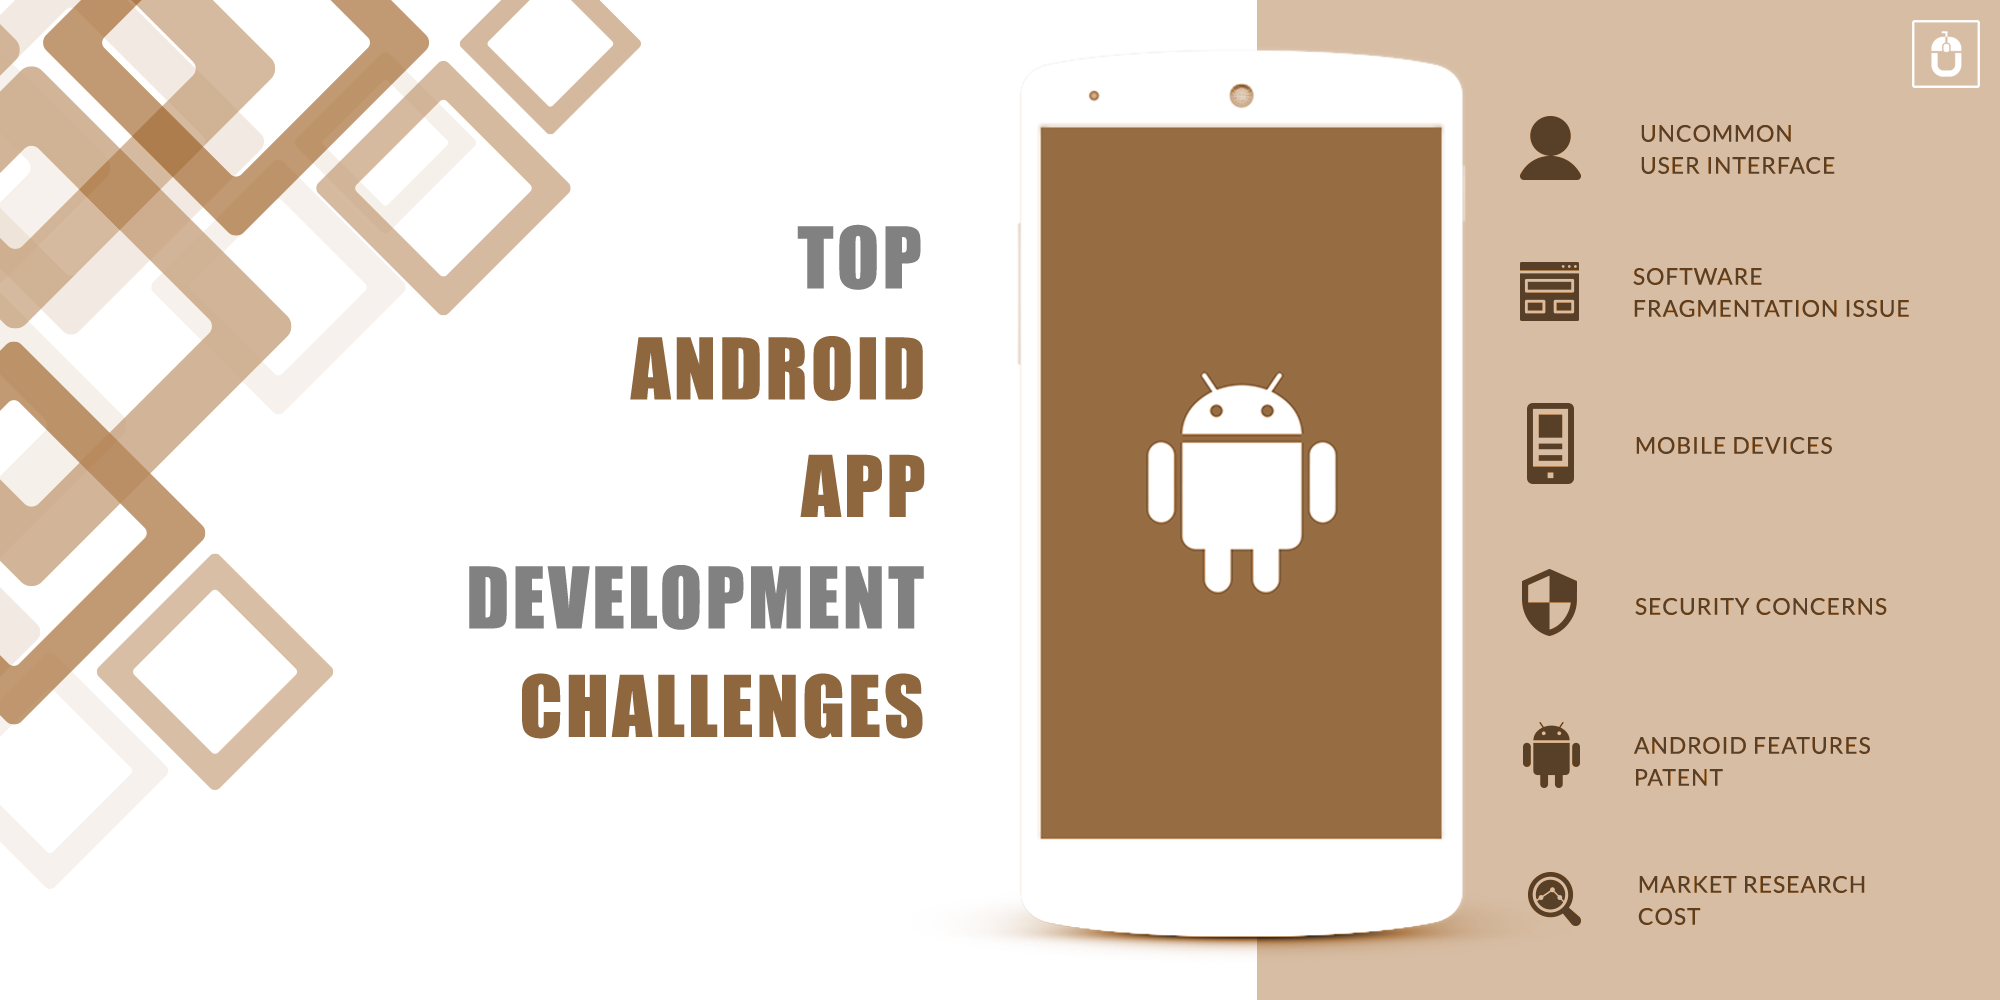 Top Android App Development Challenges